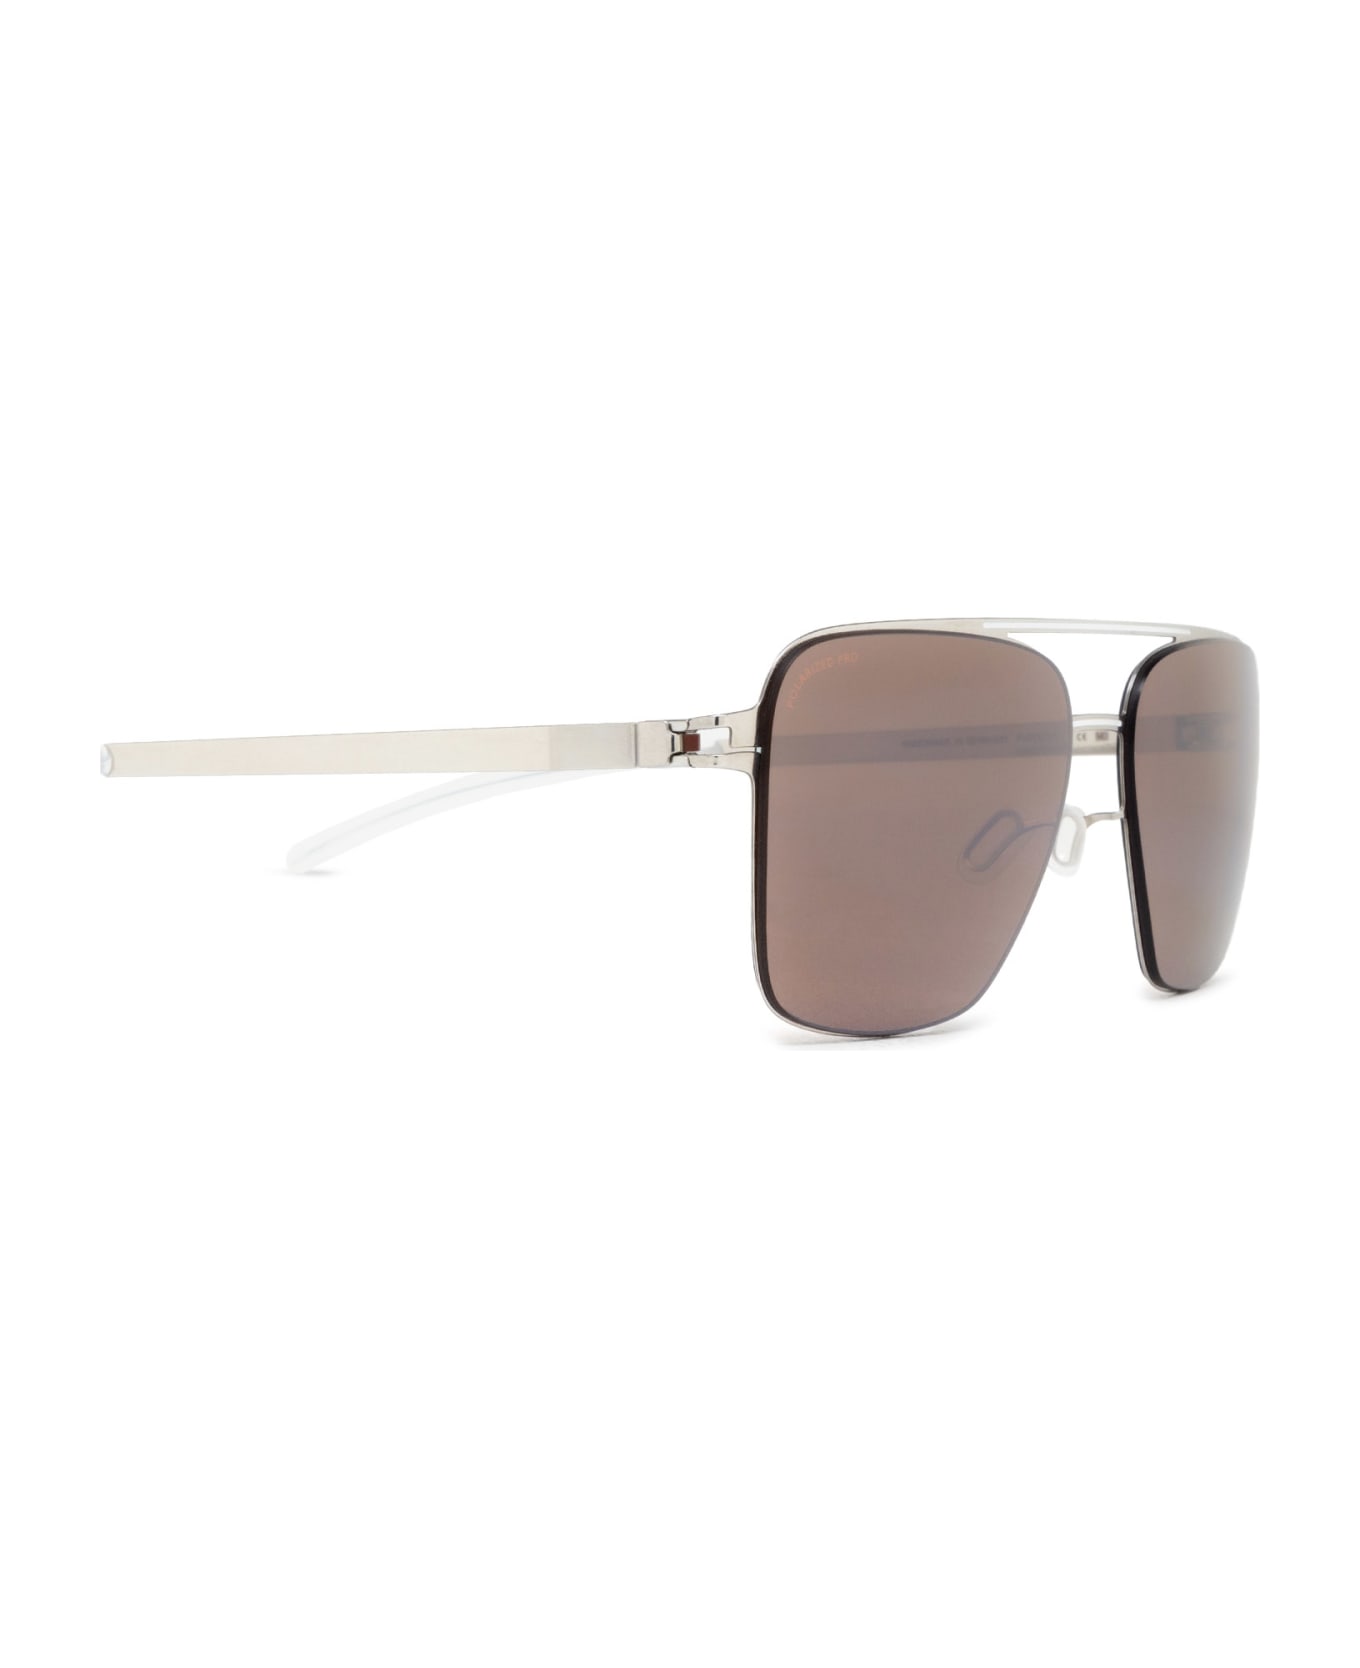 Mykita Bernie Sun Silver/white Sunglasses - Silver/White サングラス